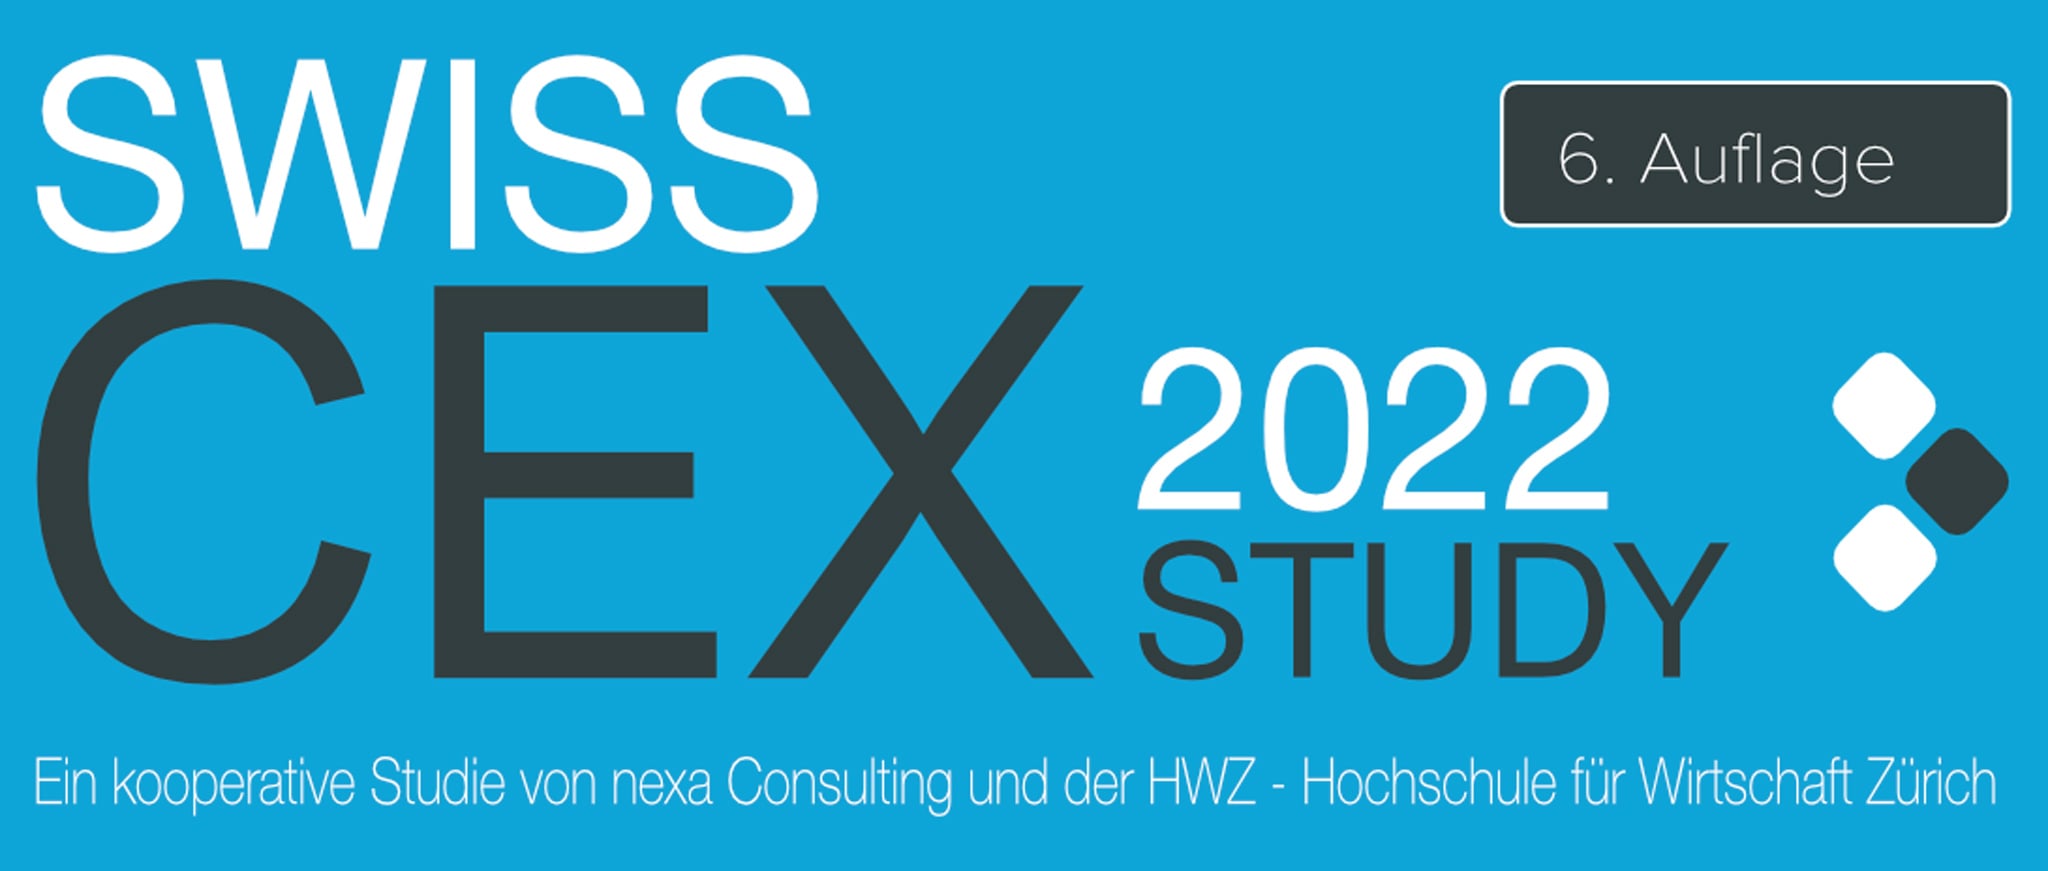 Swiss Cex Study 2022 - header